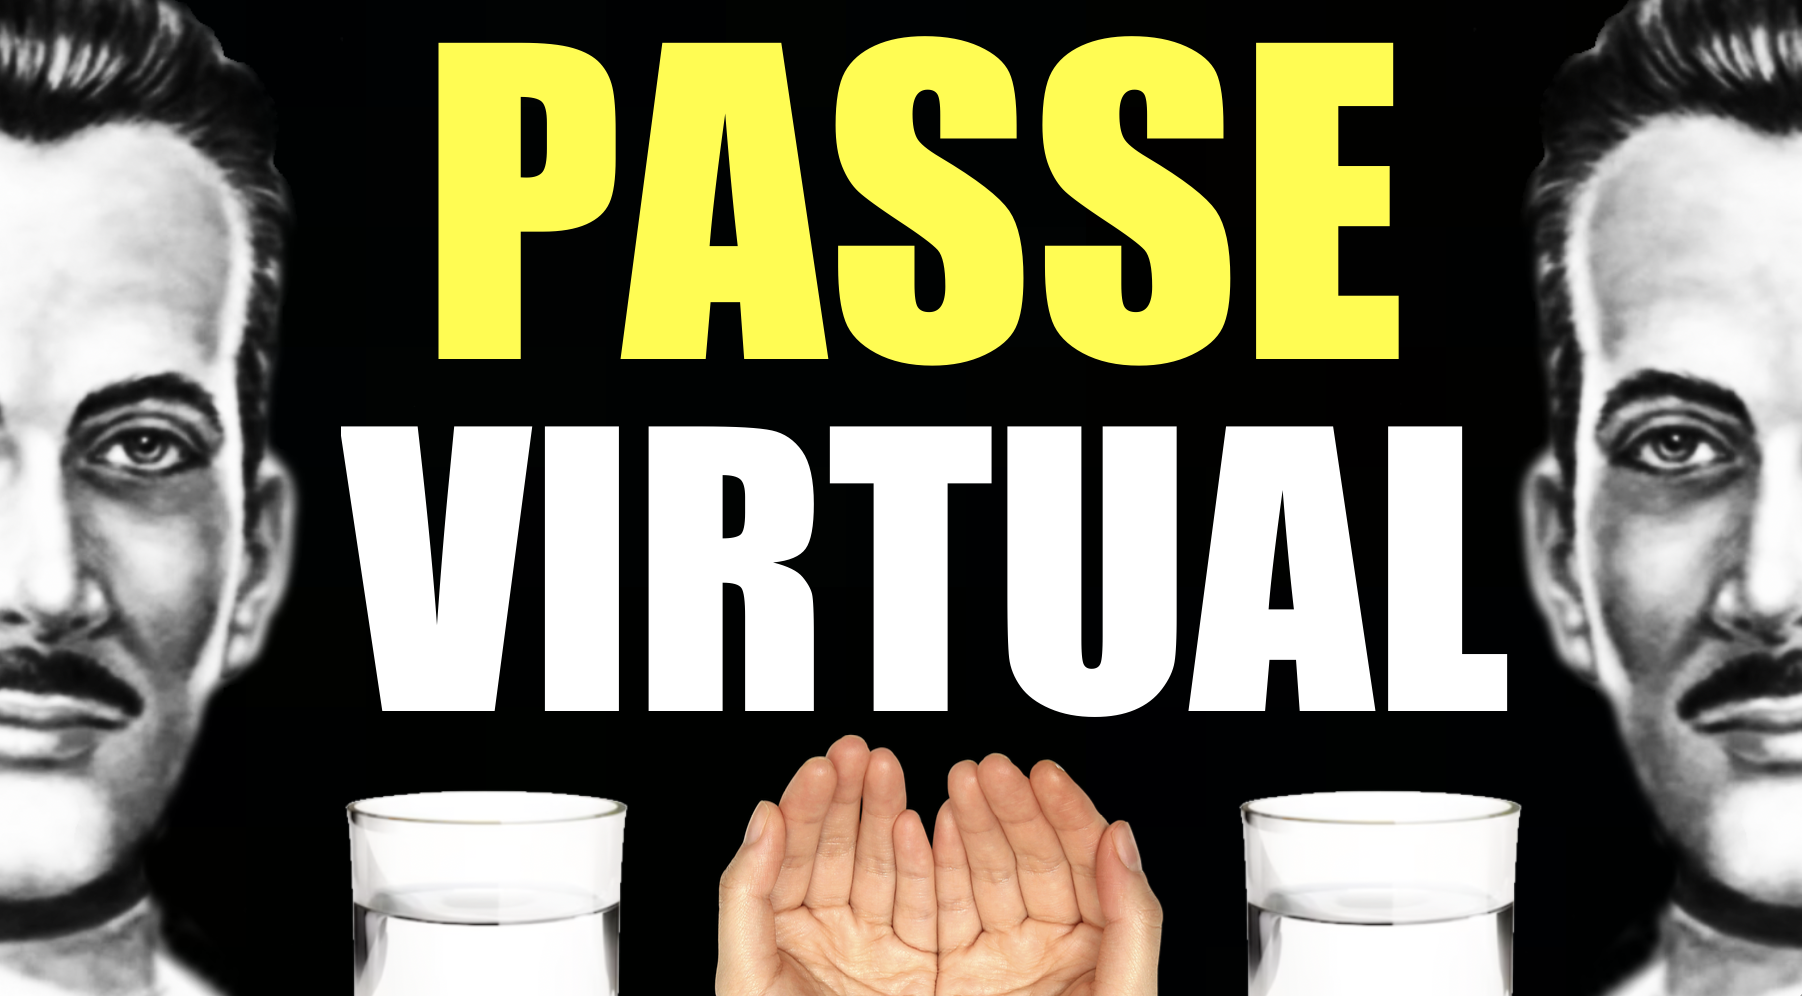 Passe Virtual